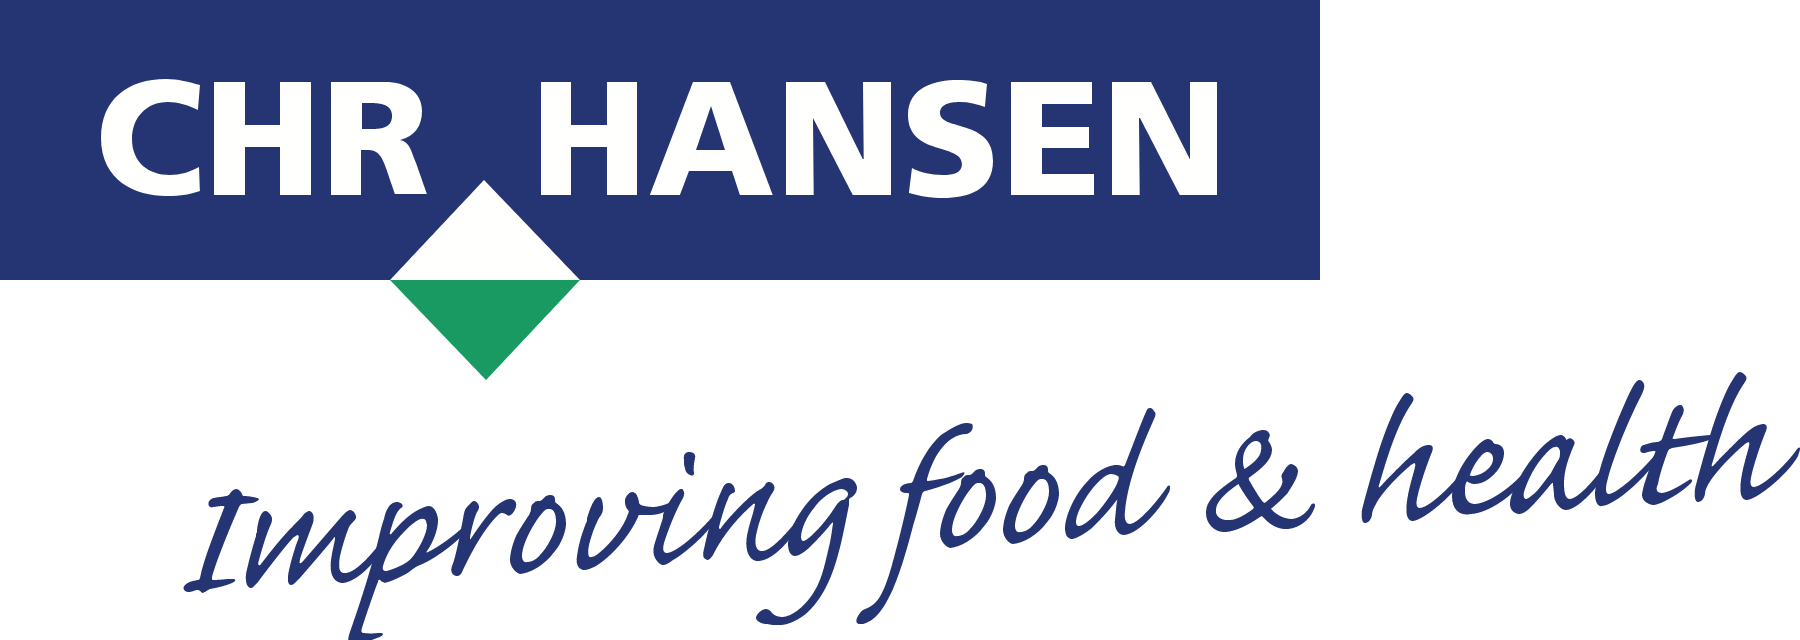 Chr. Hansen logo large (transparent PNG)